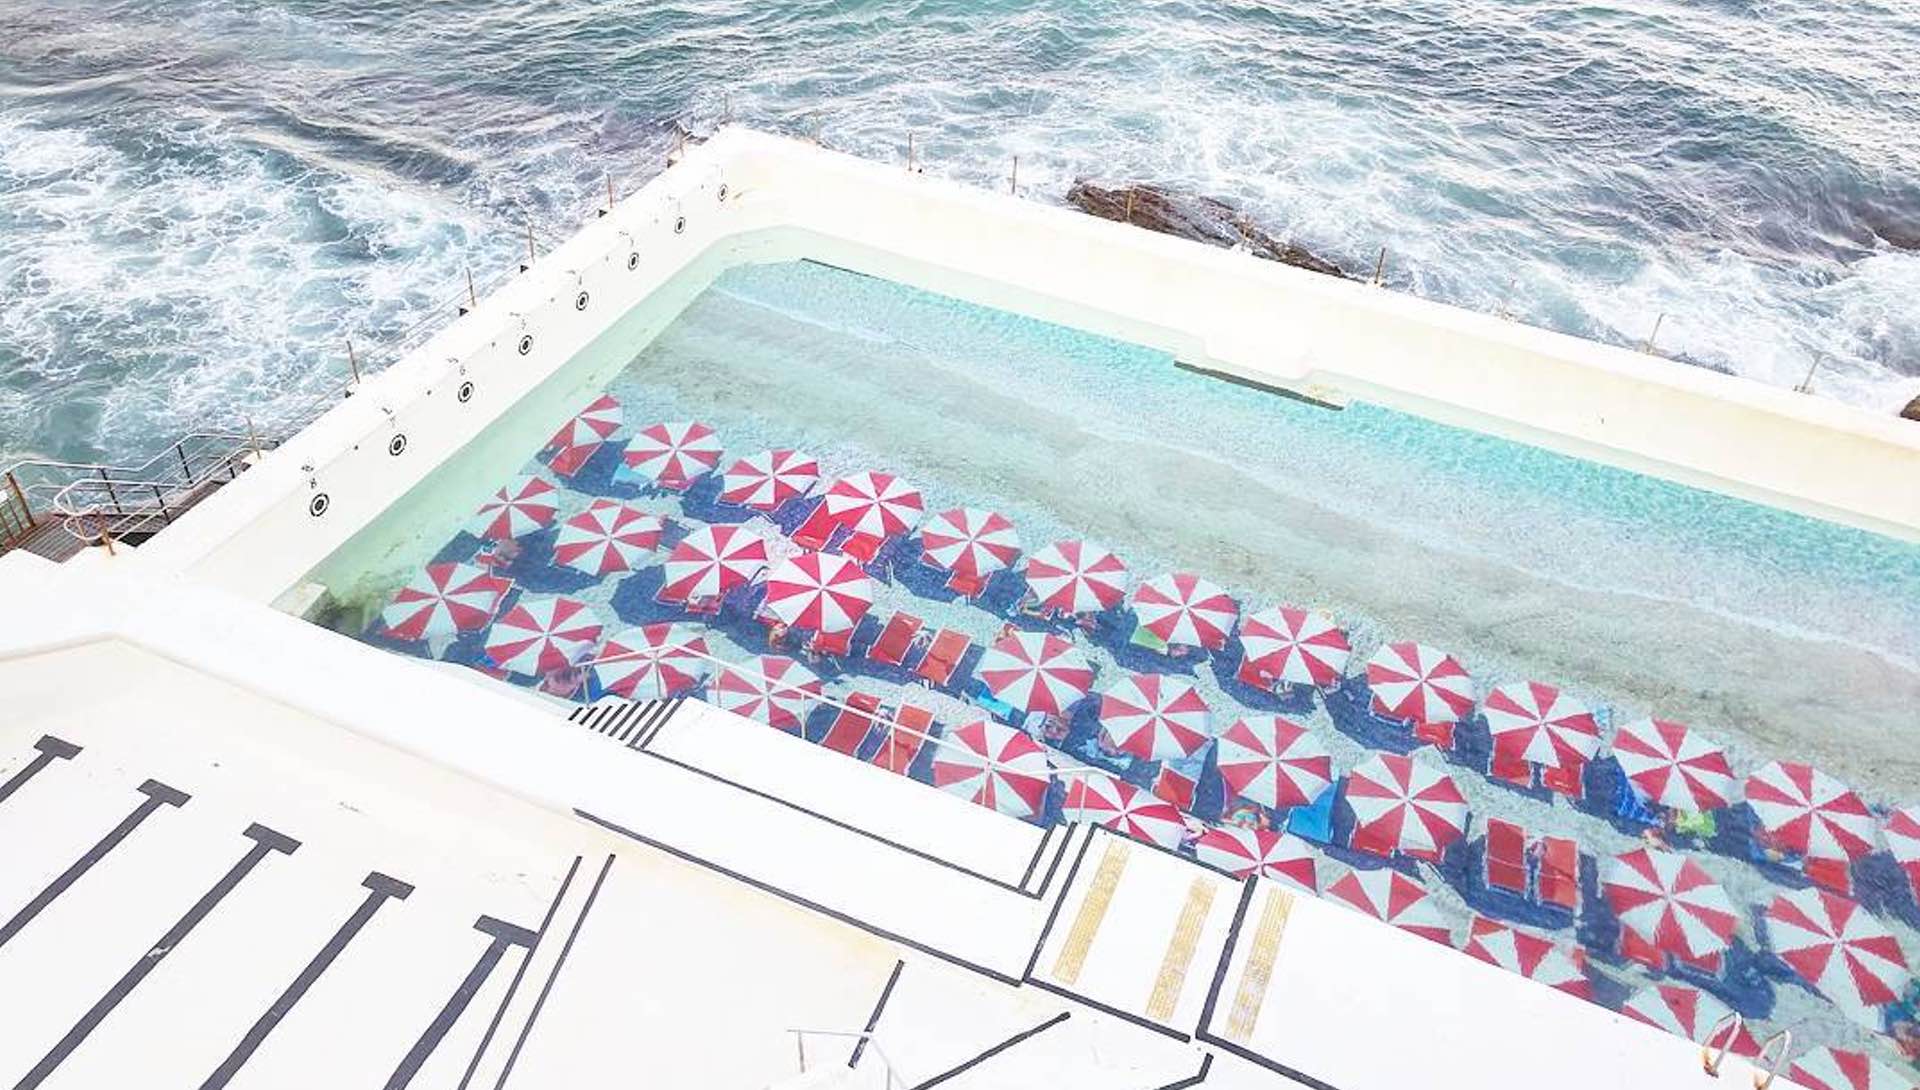 A Giant Beach Print Was Temporarily Installed on the Bottom of Bondi's Icebergs Pool